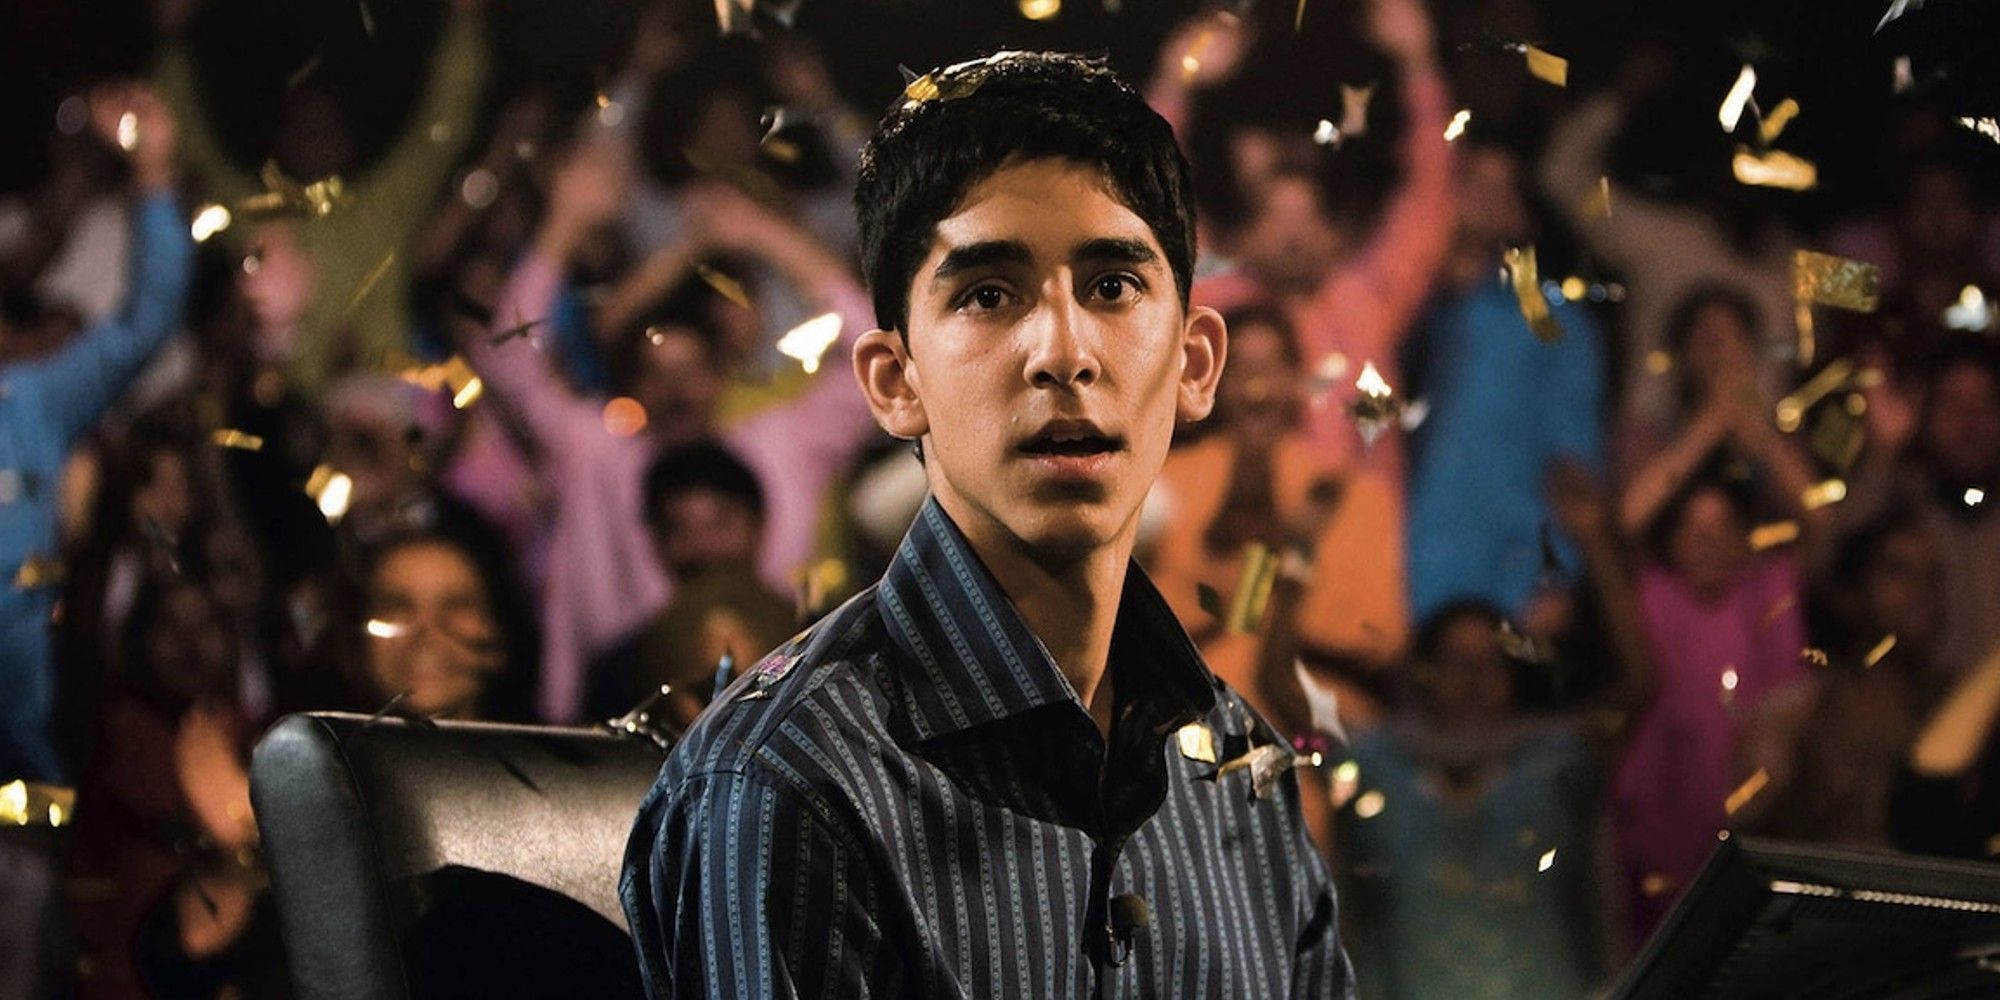 Dev Patel as Jamal, looking surprised while confetti falls around him in Slumdog Millionaire.